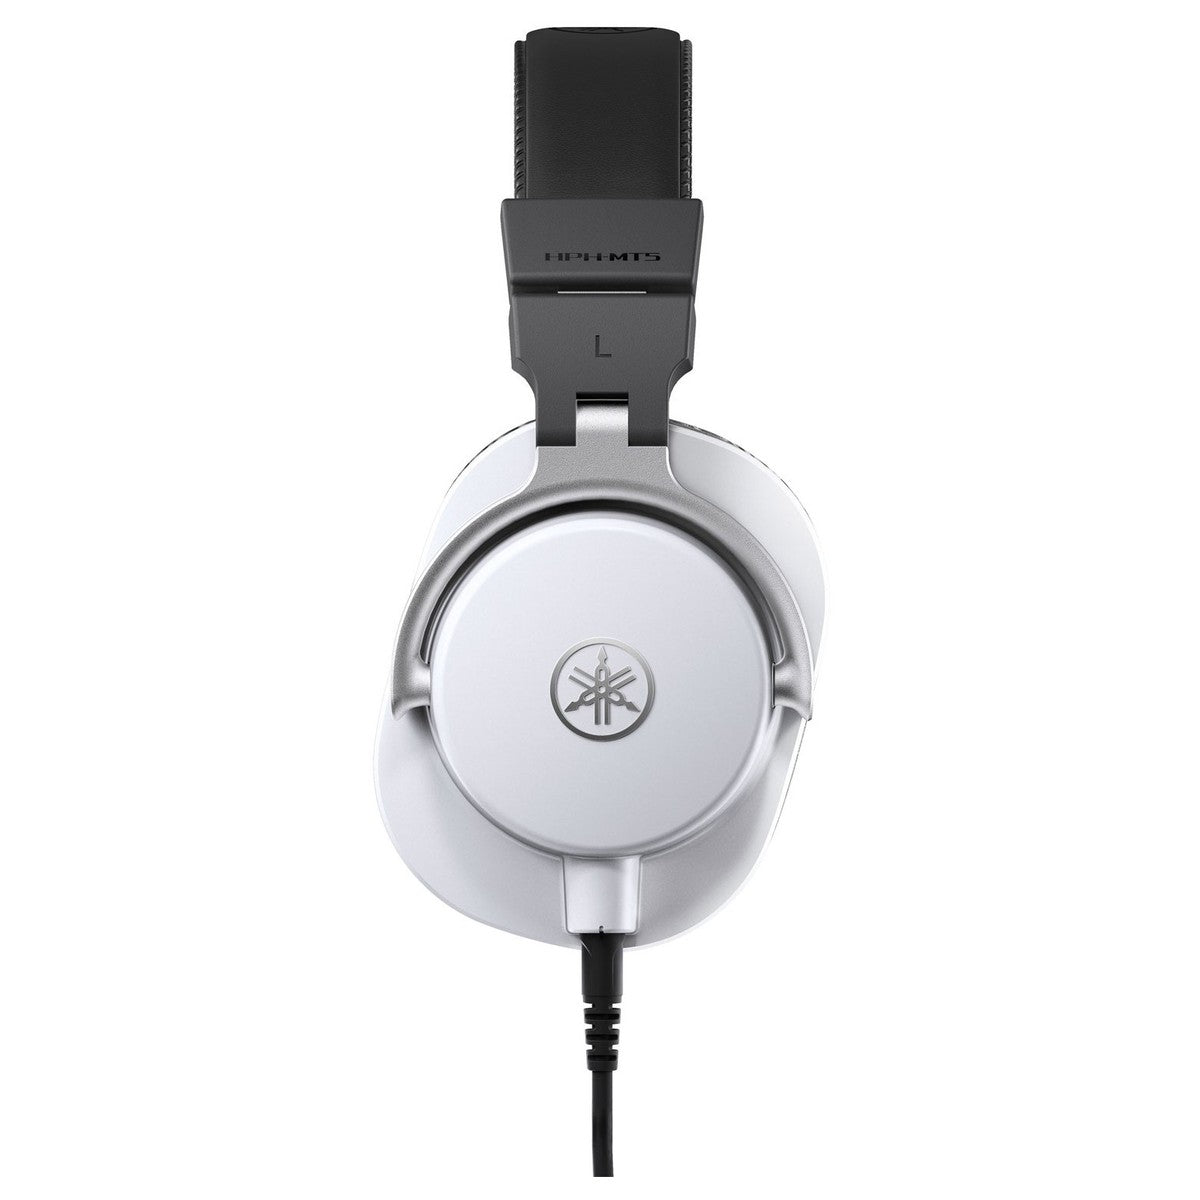 Yamaha MT5W Studio Monitor Headphones